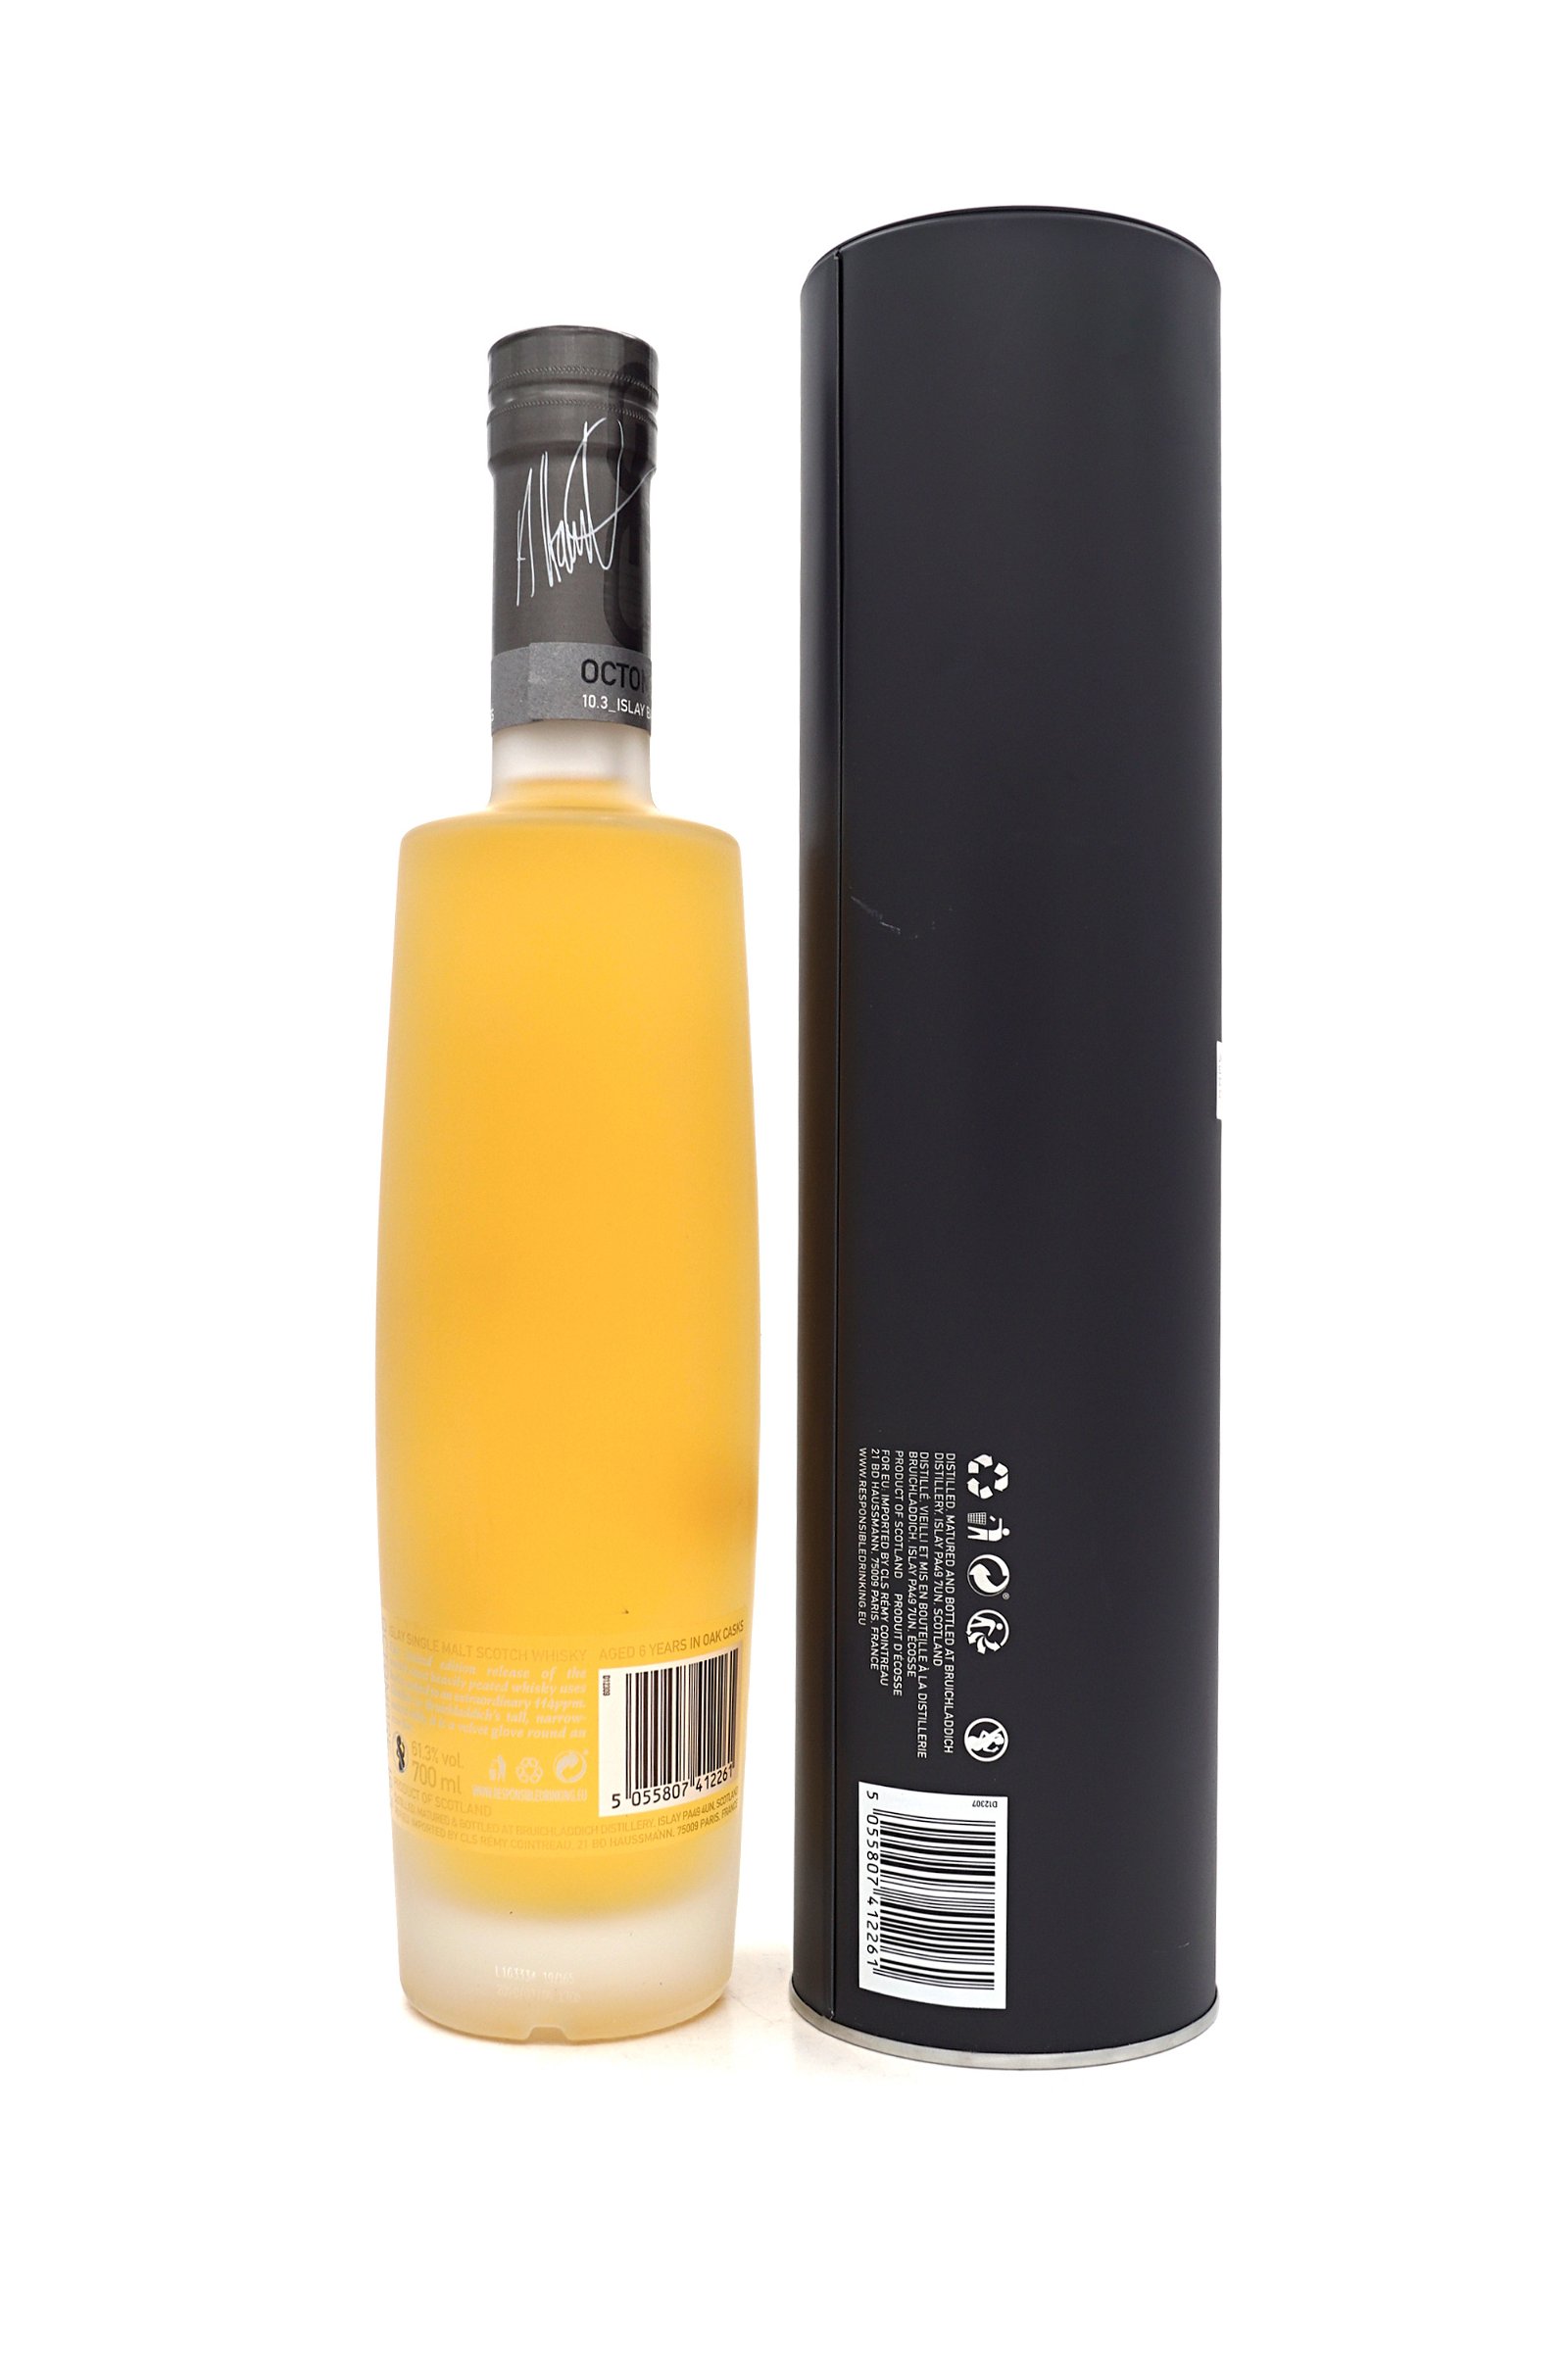 Bruichladdich Octomore 10.3 6 Jahre Islay Barley Super Heavily Peated Islay Single Malt Scotch Whisky